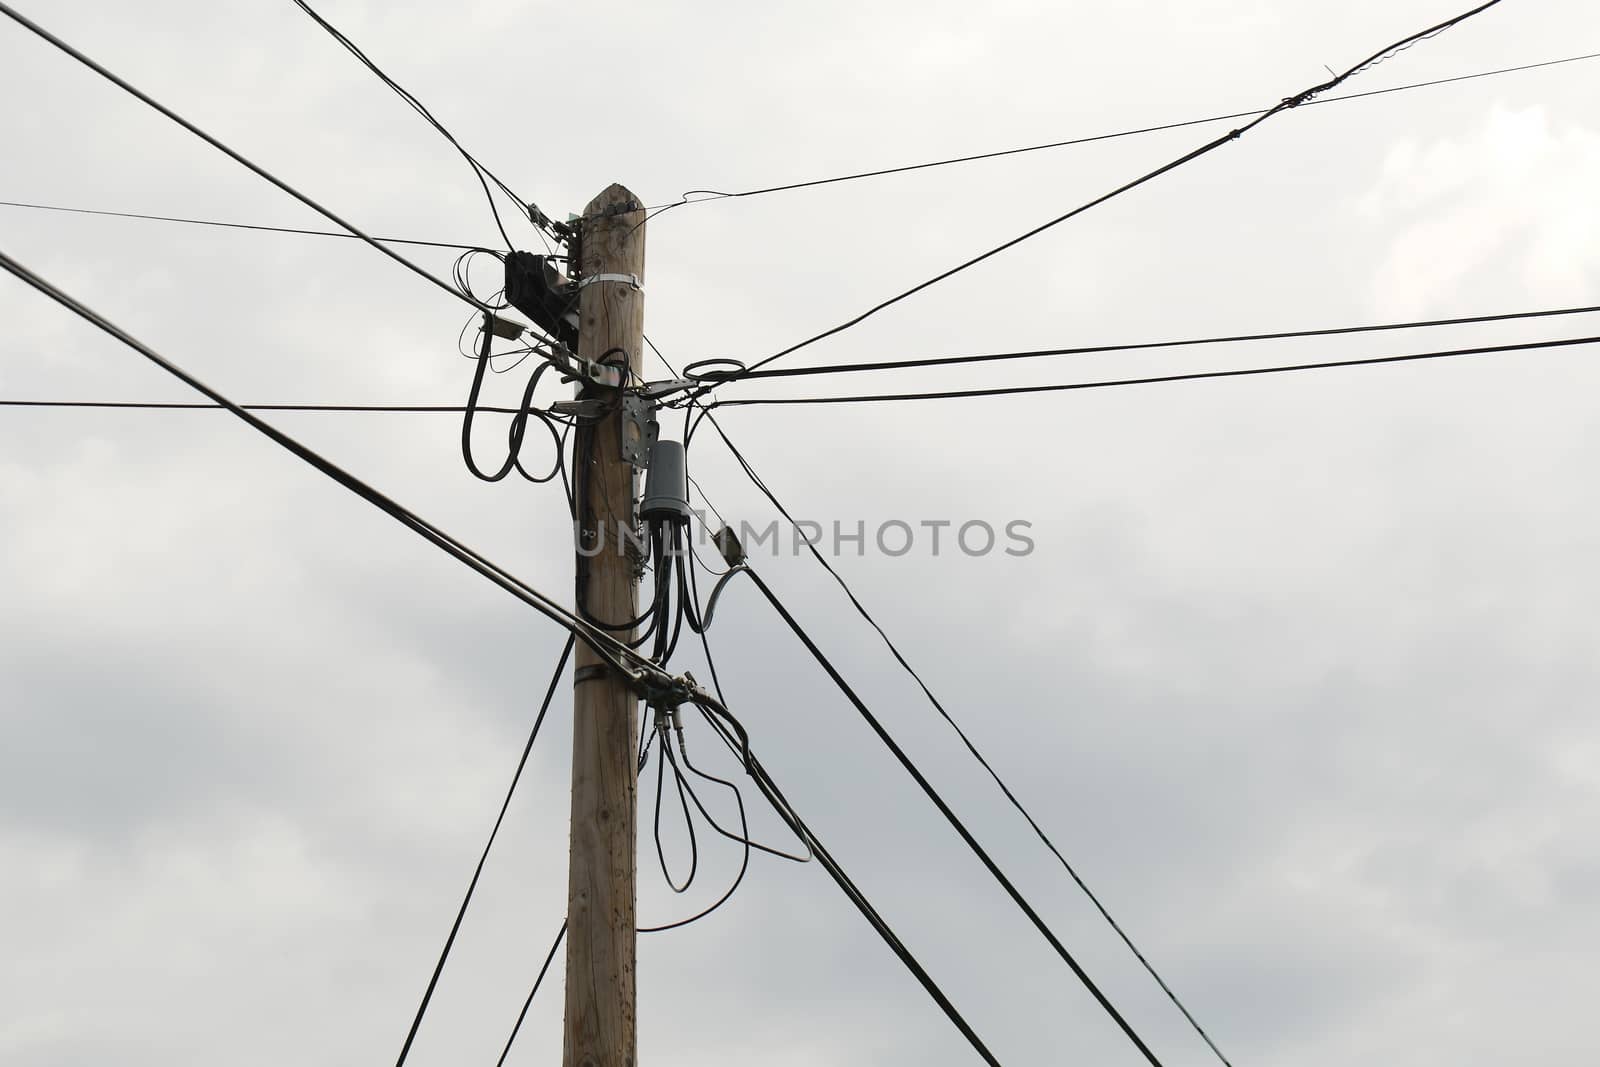 electric lines by Gudella